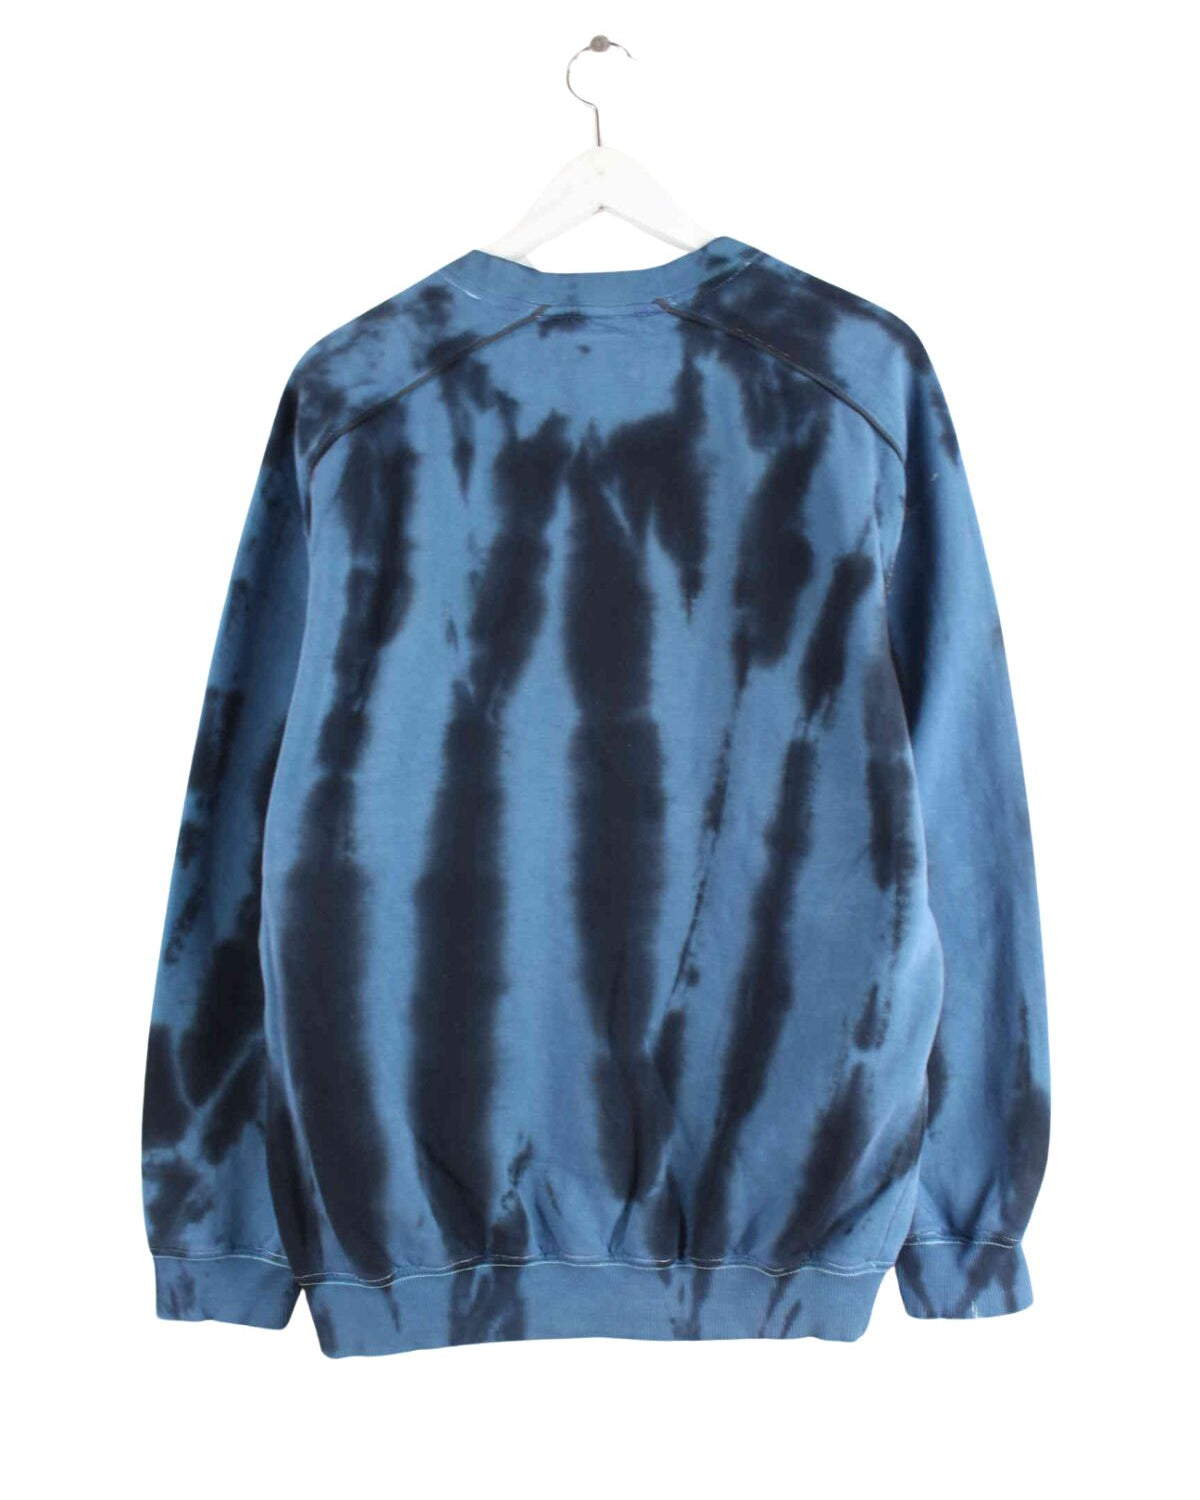 Adidas y2k Embroidered Tie Dye Sweater Blau L (back image)